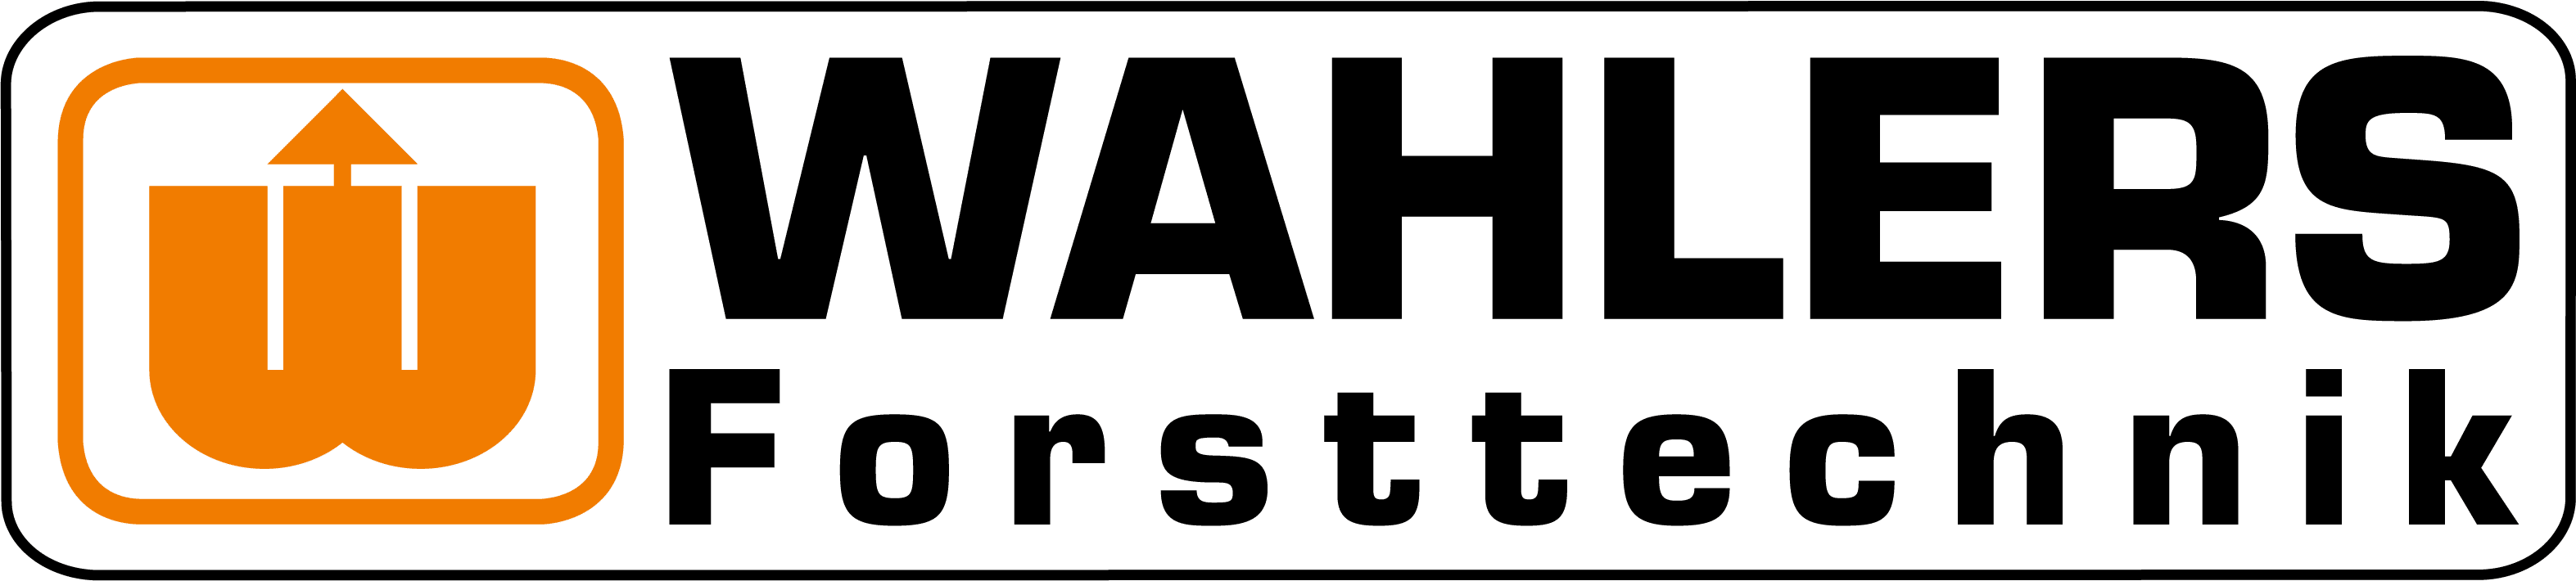 Wahlers Forsttechnik Elektromechanik KG | Logo | Kundenreferenz